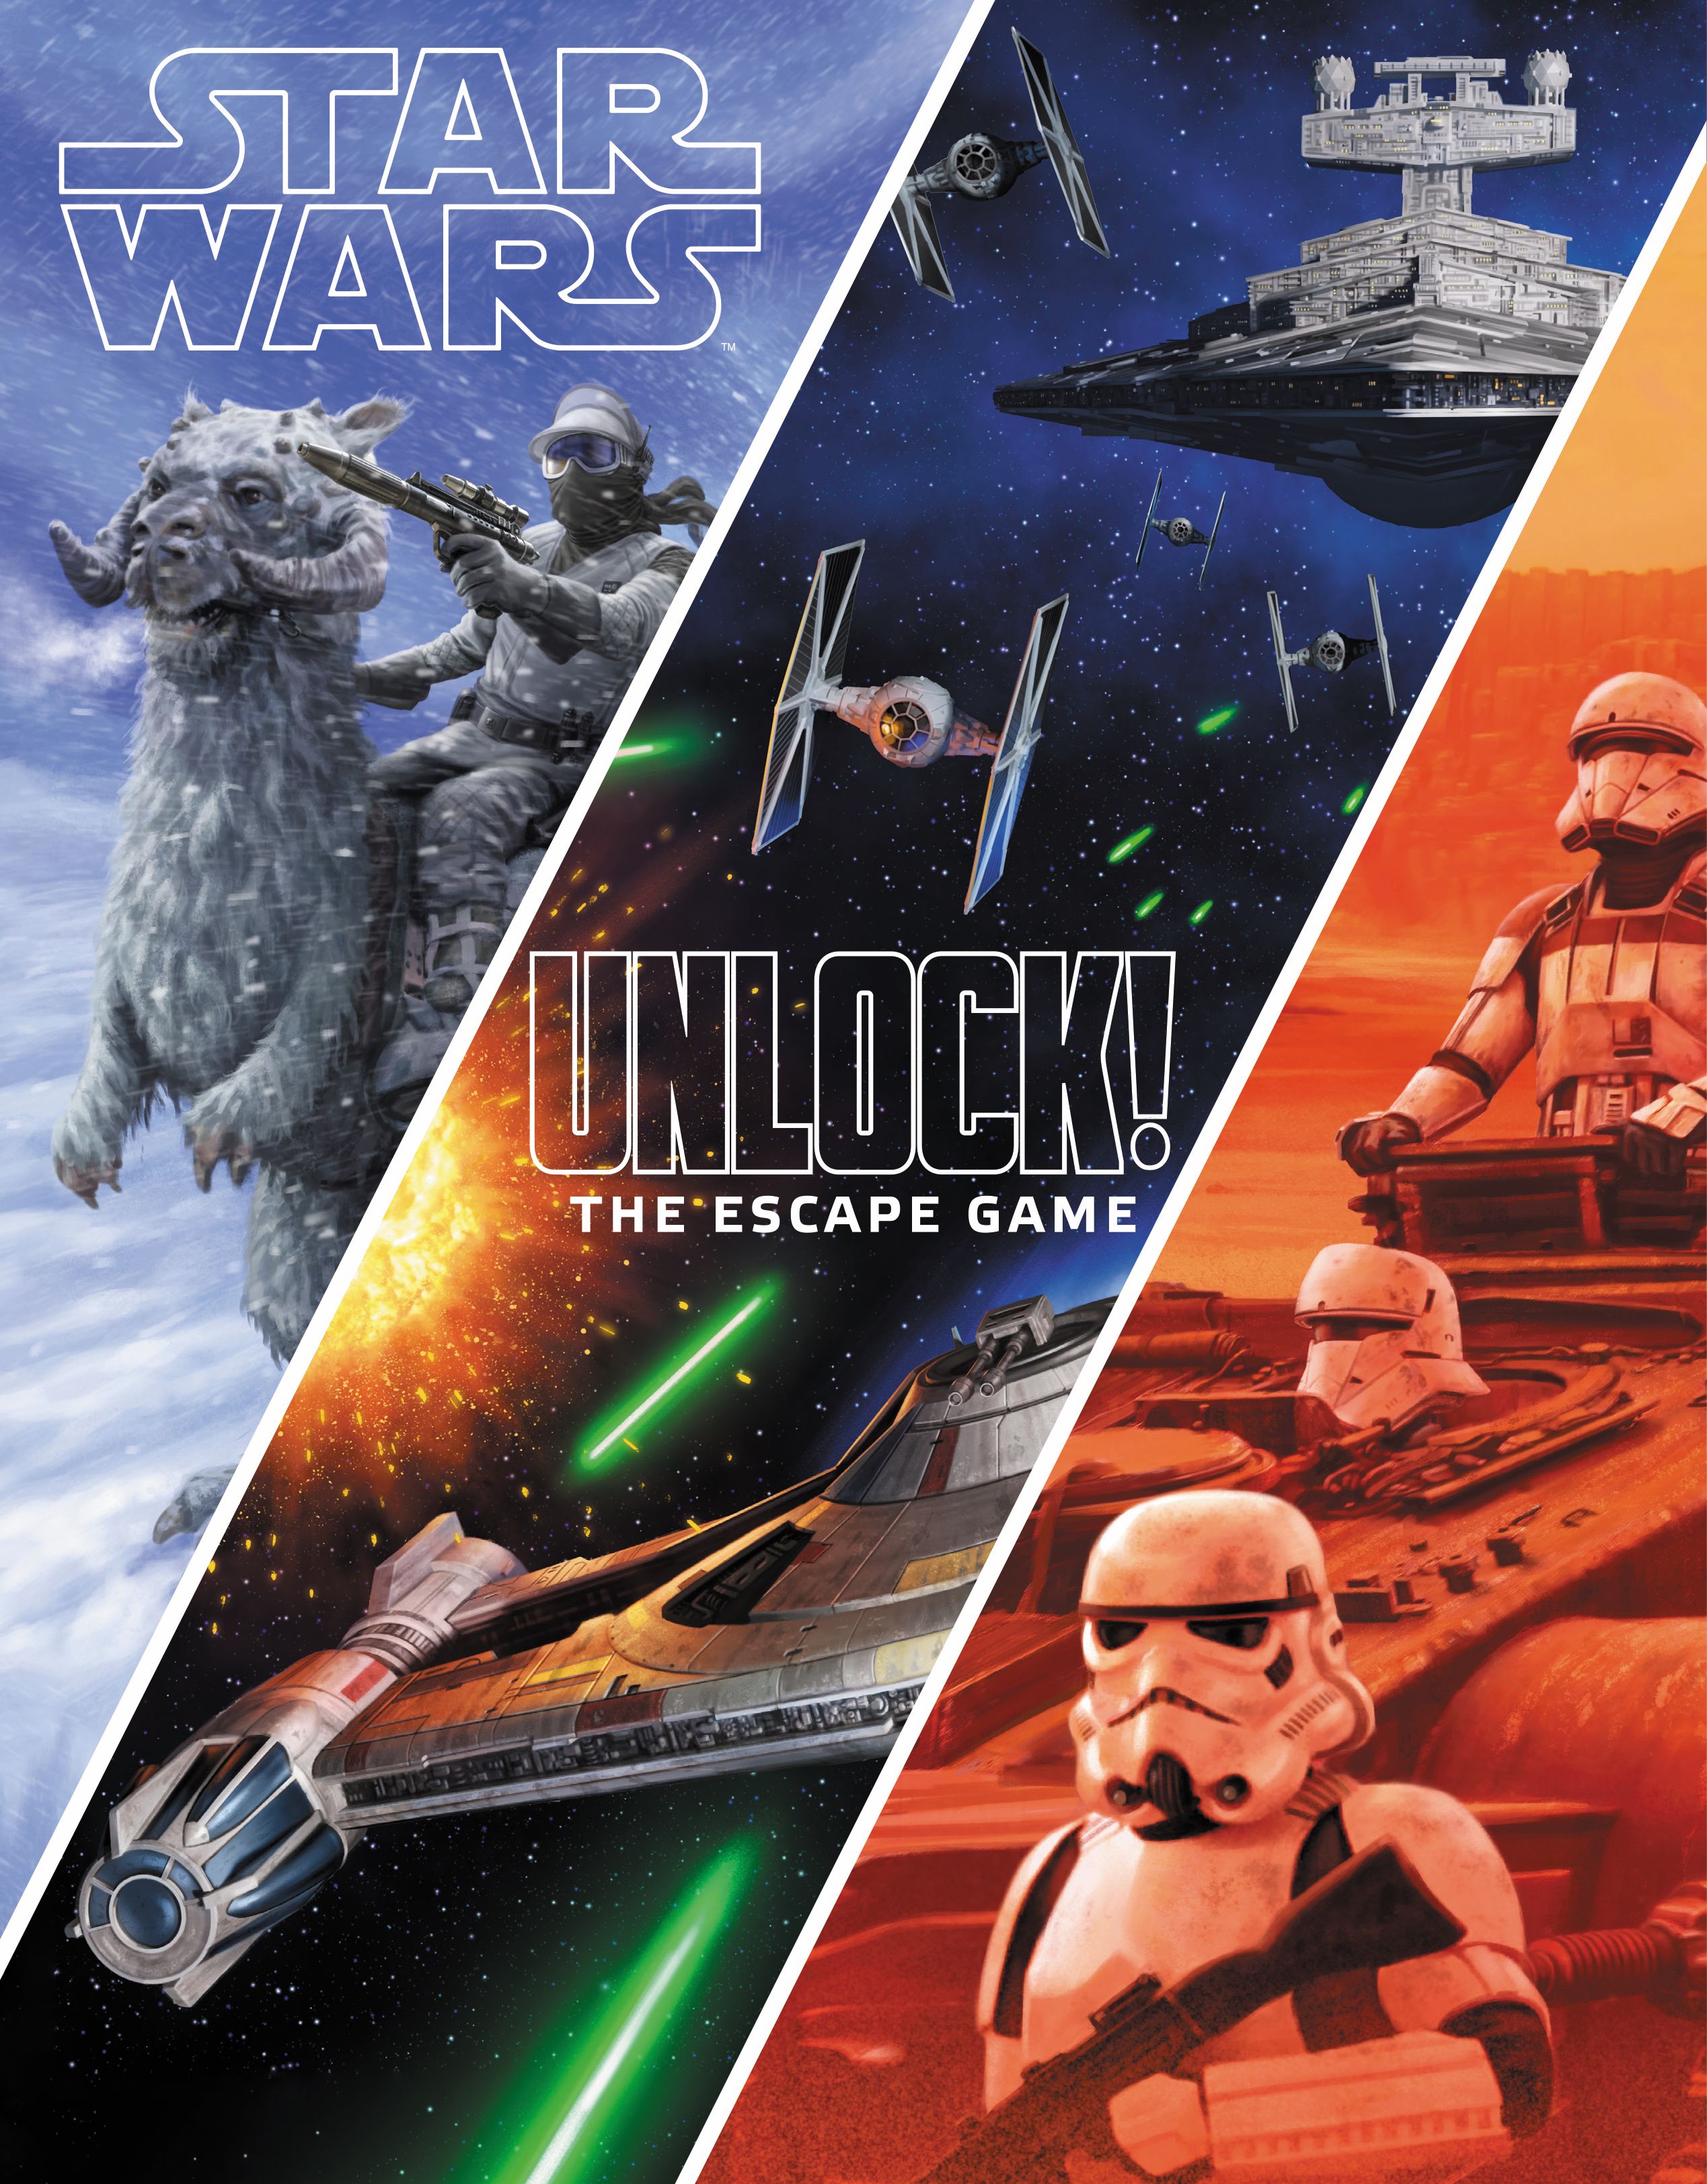 Star Wars: Unlock!